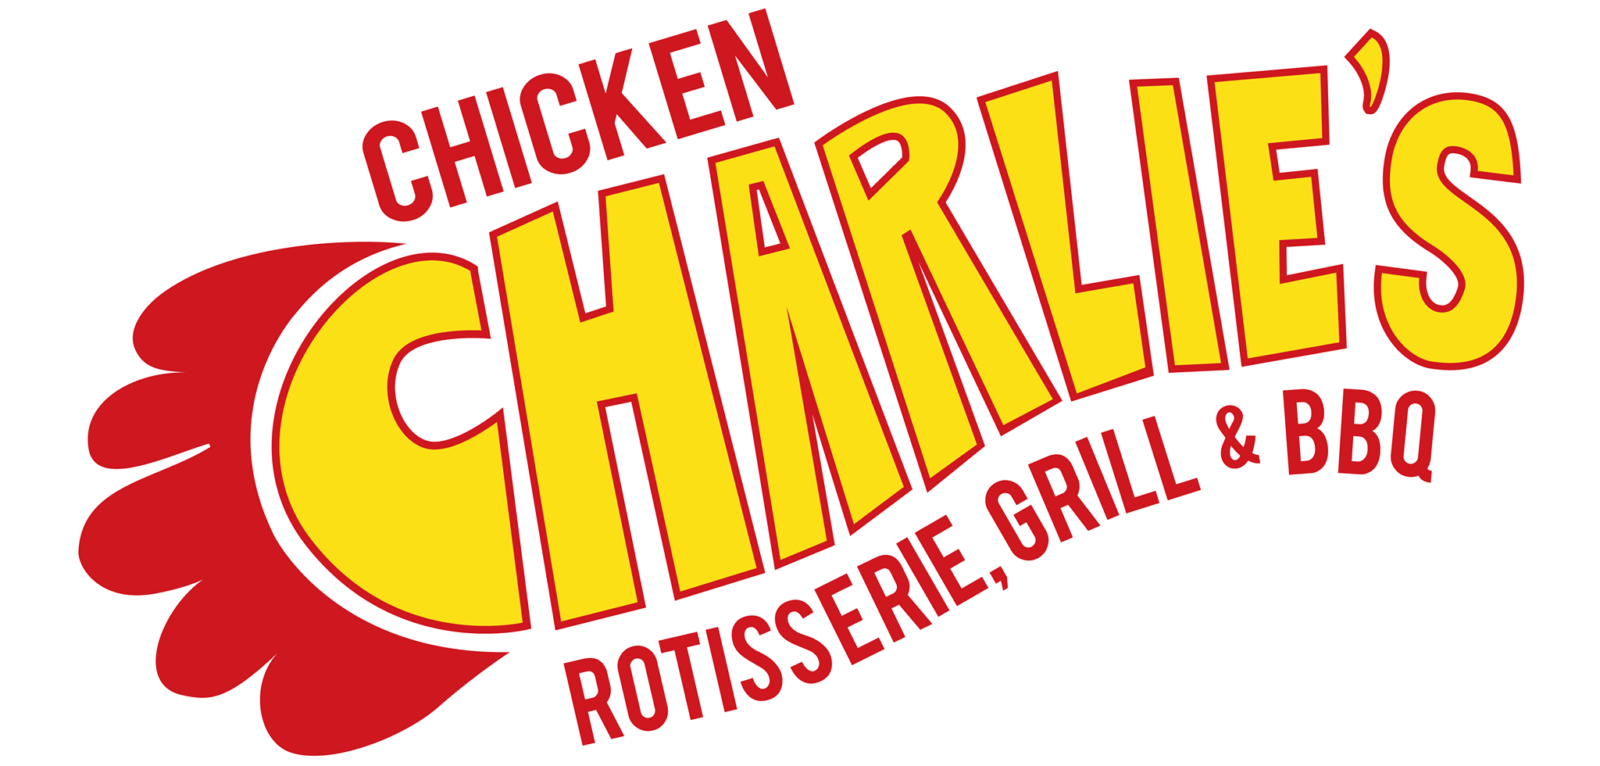 Chicken Charlies Rotisserie, Grill & BBQ - South Burlington, Vermont